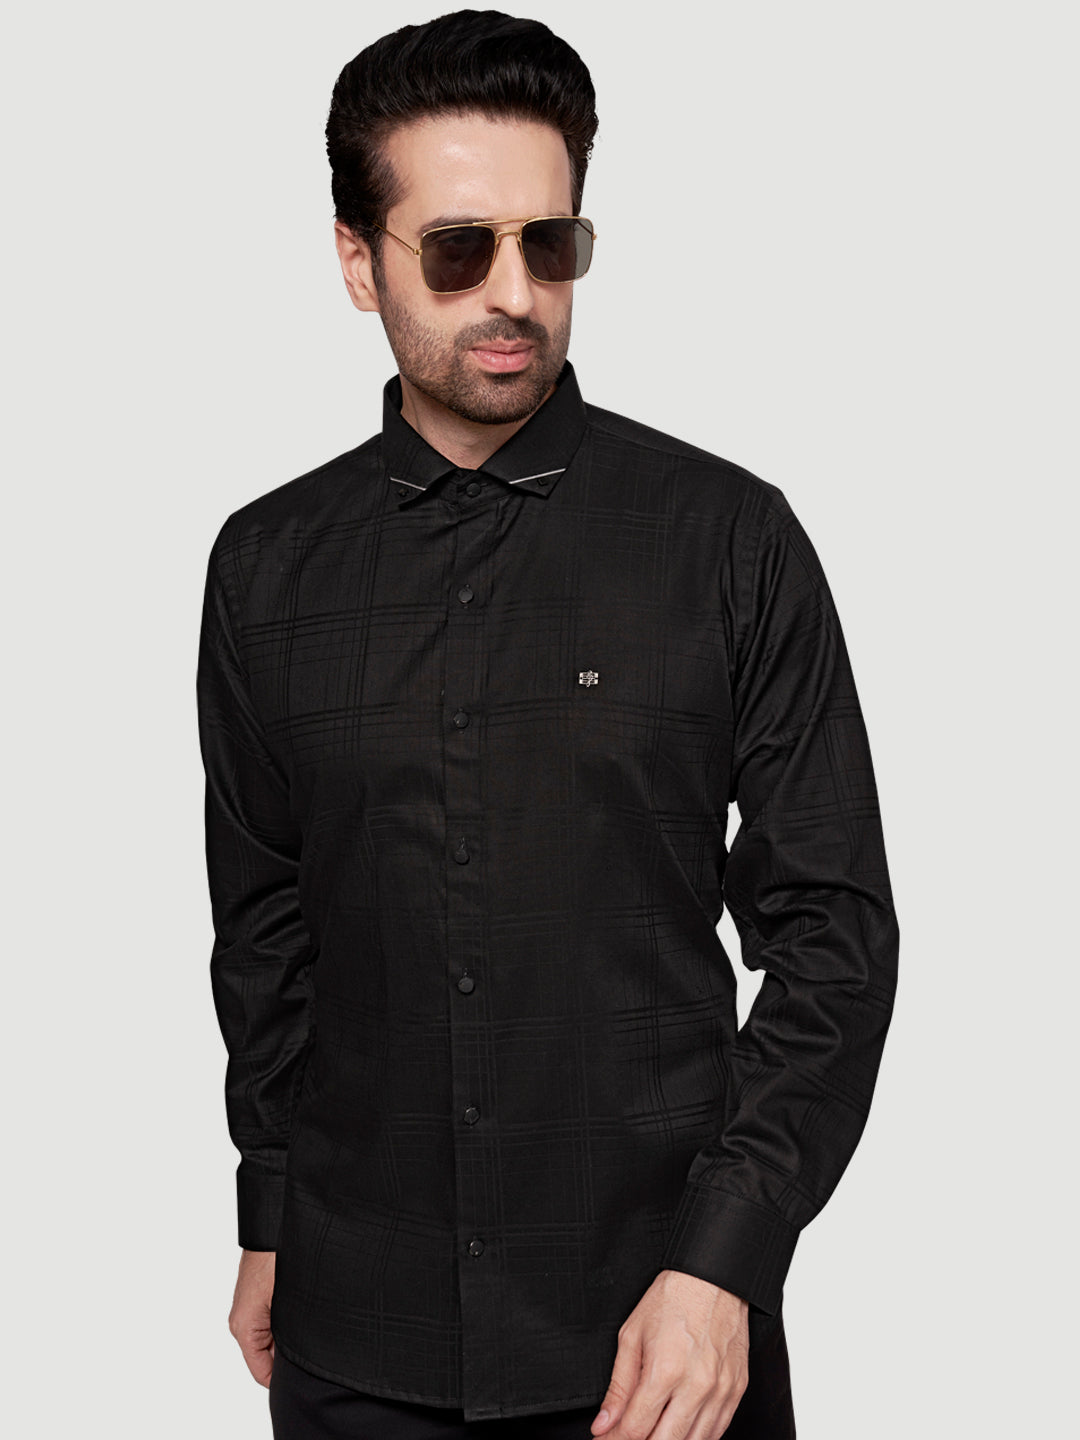 Black and White Shirt Designer Sheen Shirt with Metal Broach-3